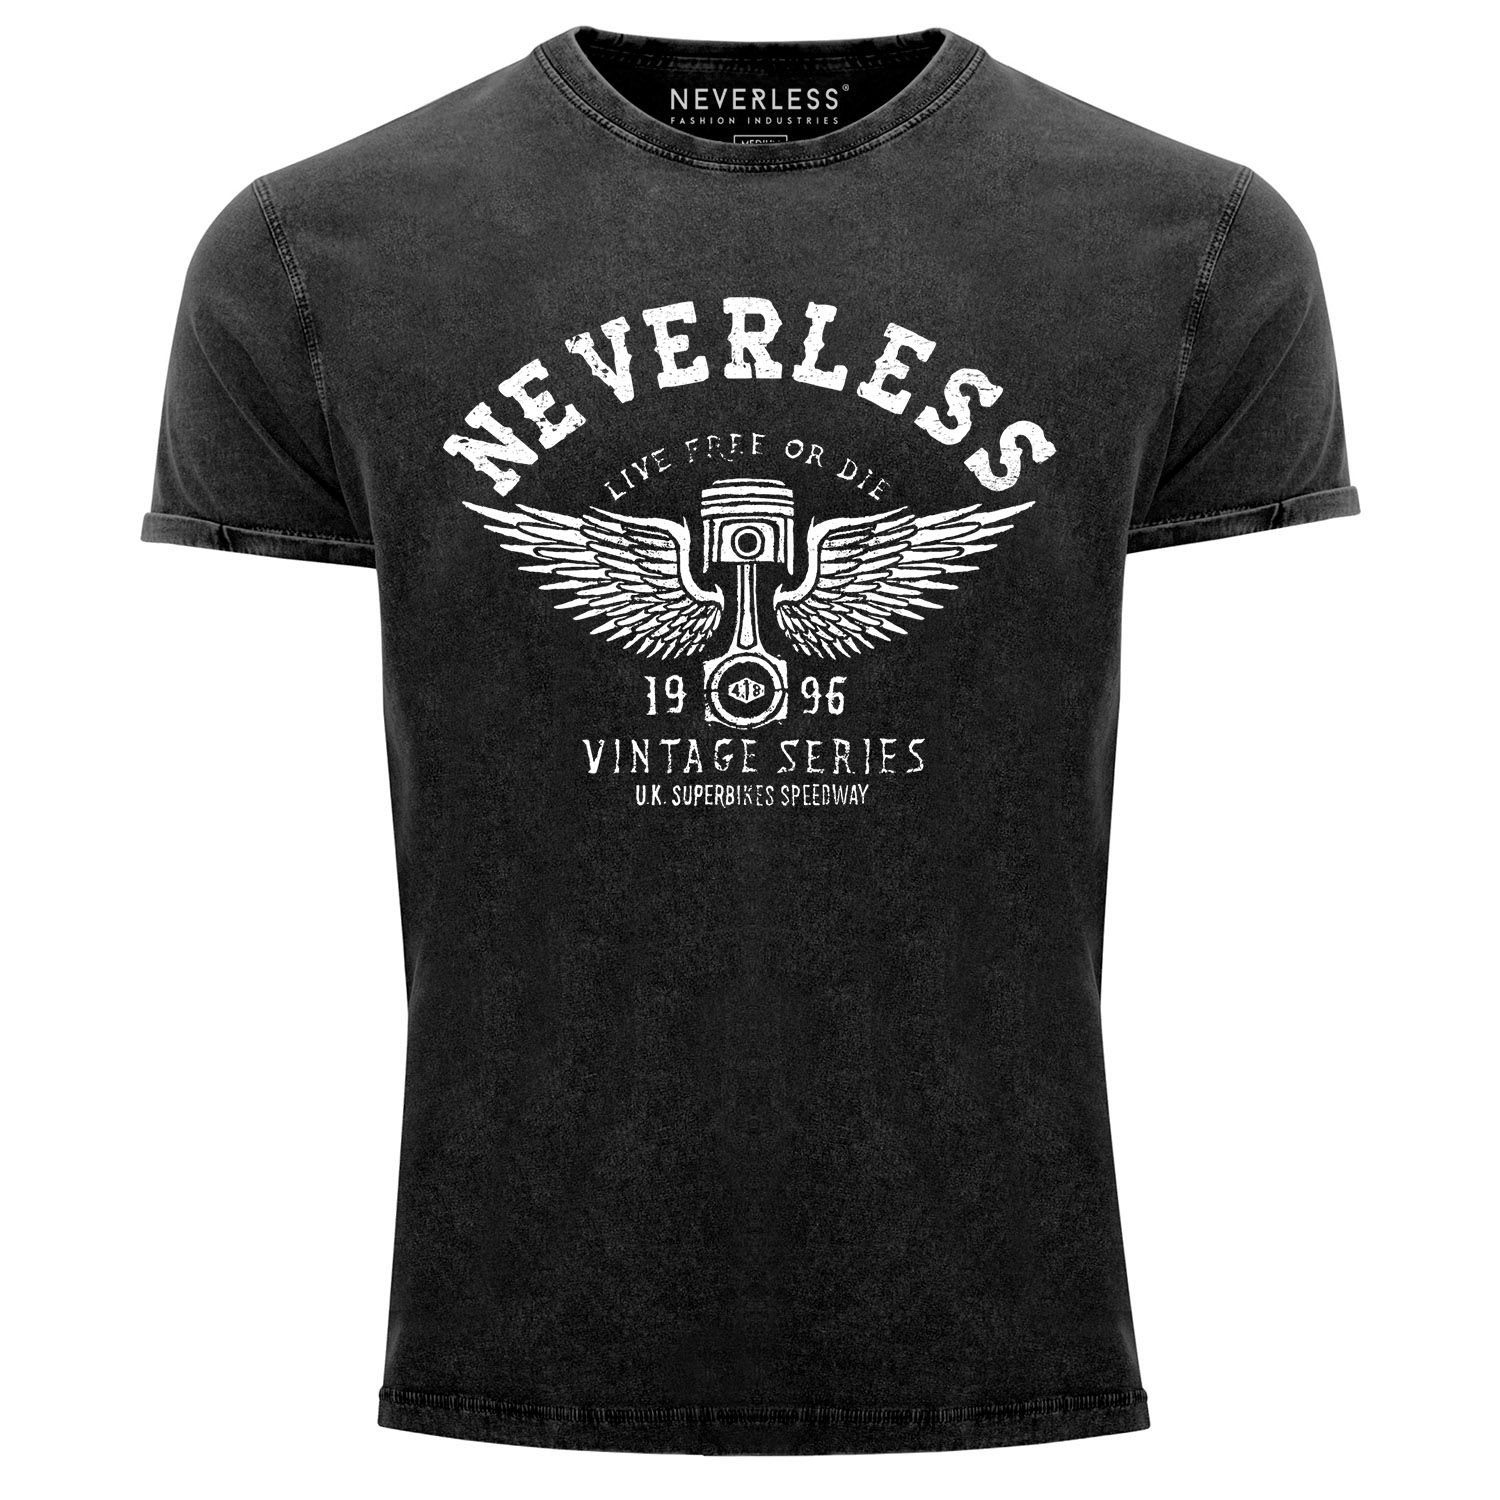 Retro Fit T-Shirt Print-Shirt Angesagtes Shirt Print Auto Kolben Vintage Cooles mit Neverless Slim Used Herren Neverless® schwarz Look